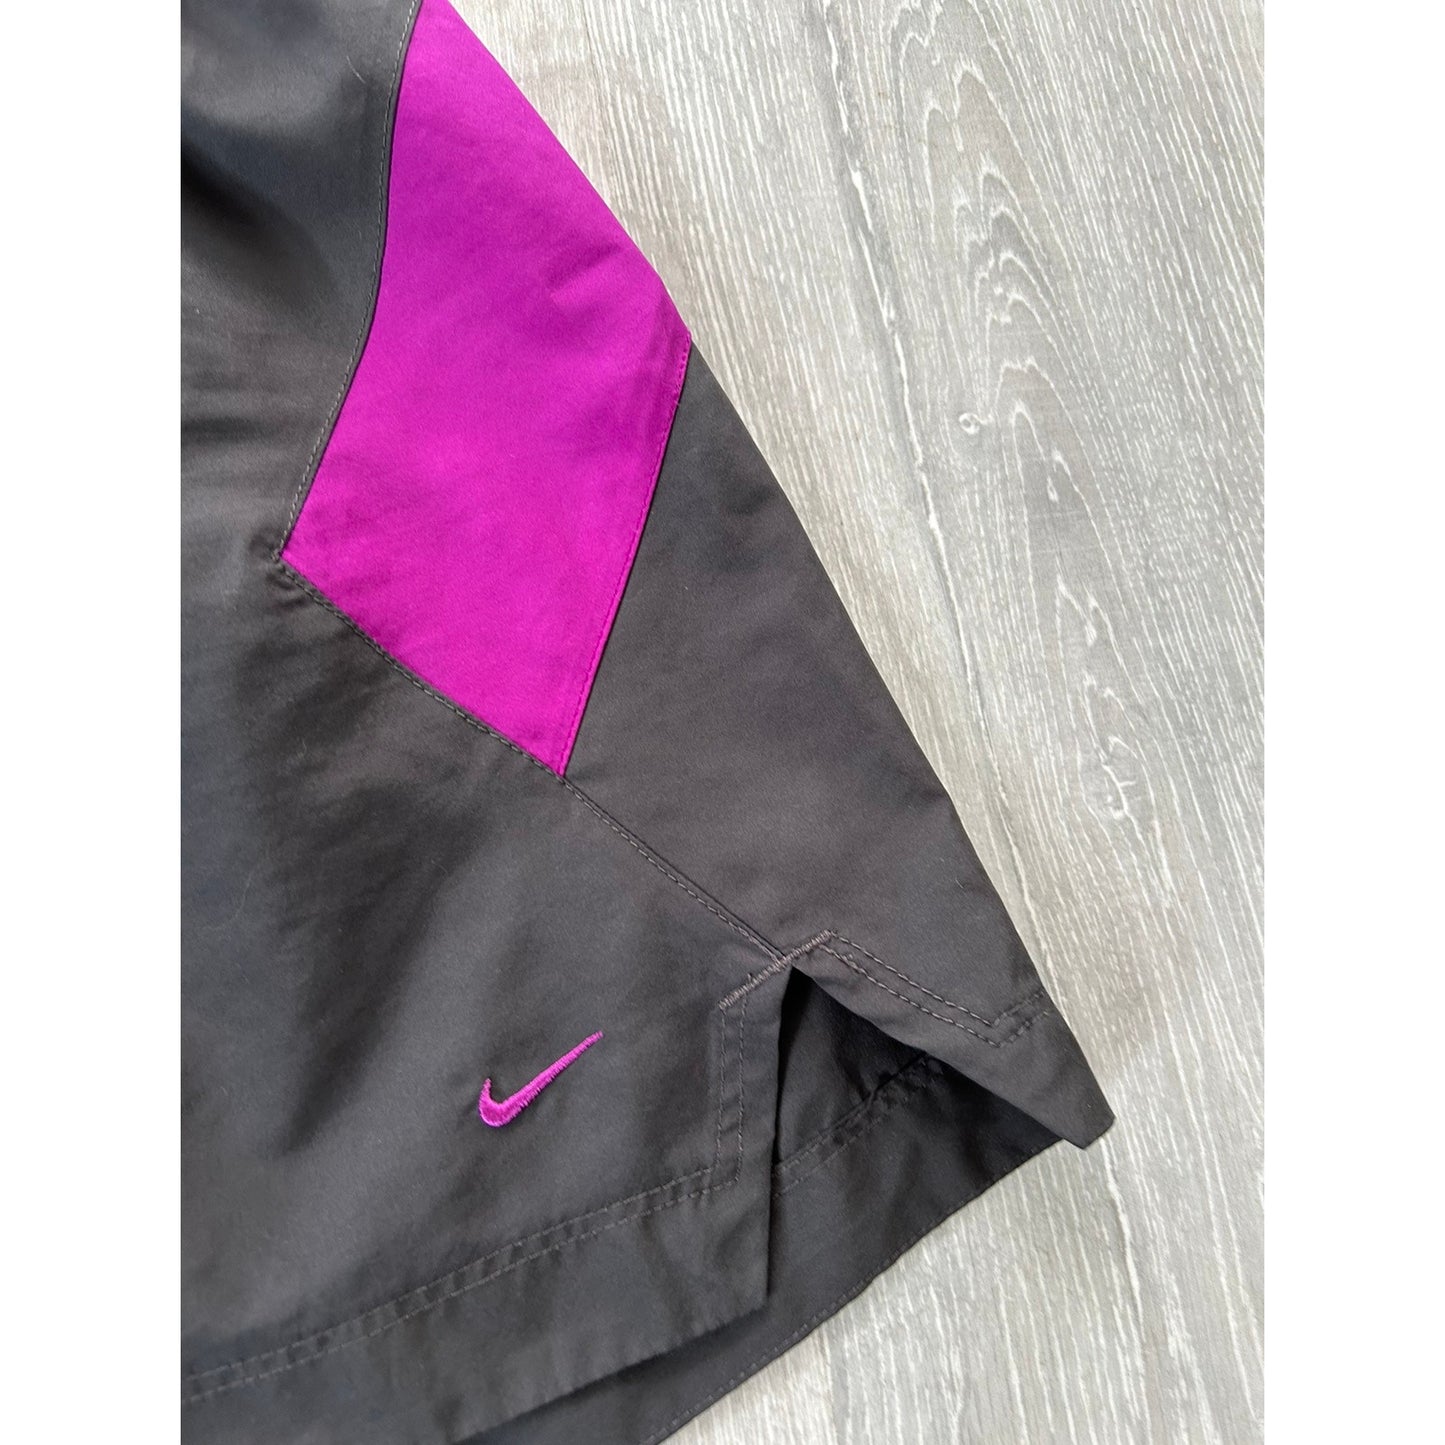 Nike vintage grey purple shorts track pant small swoosh